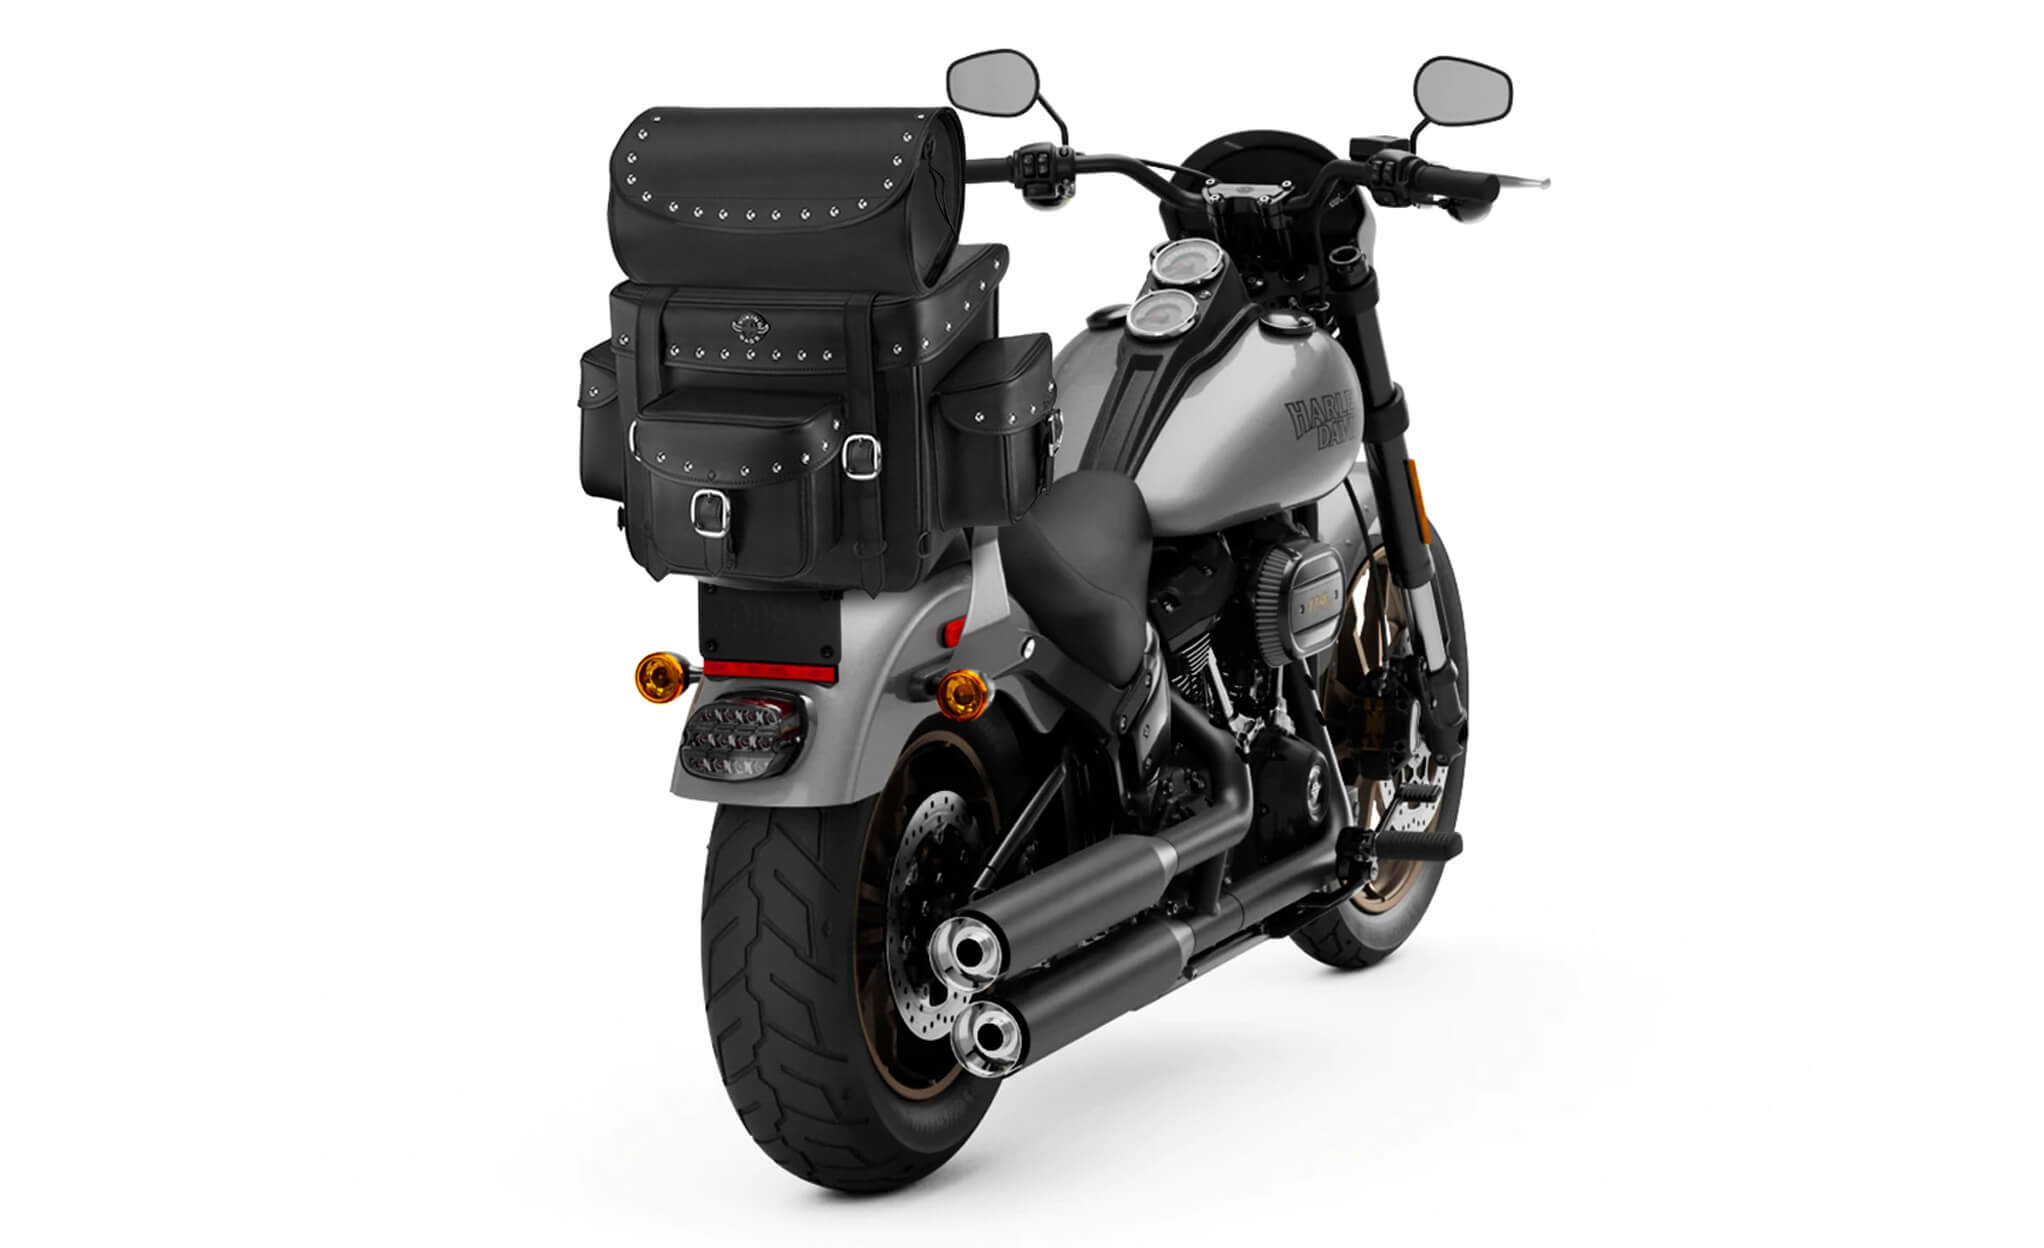 Viking Revival Series Large Yamaha Studded Motorcycle Sissy Bar Bag Bag on Bike View @expand